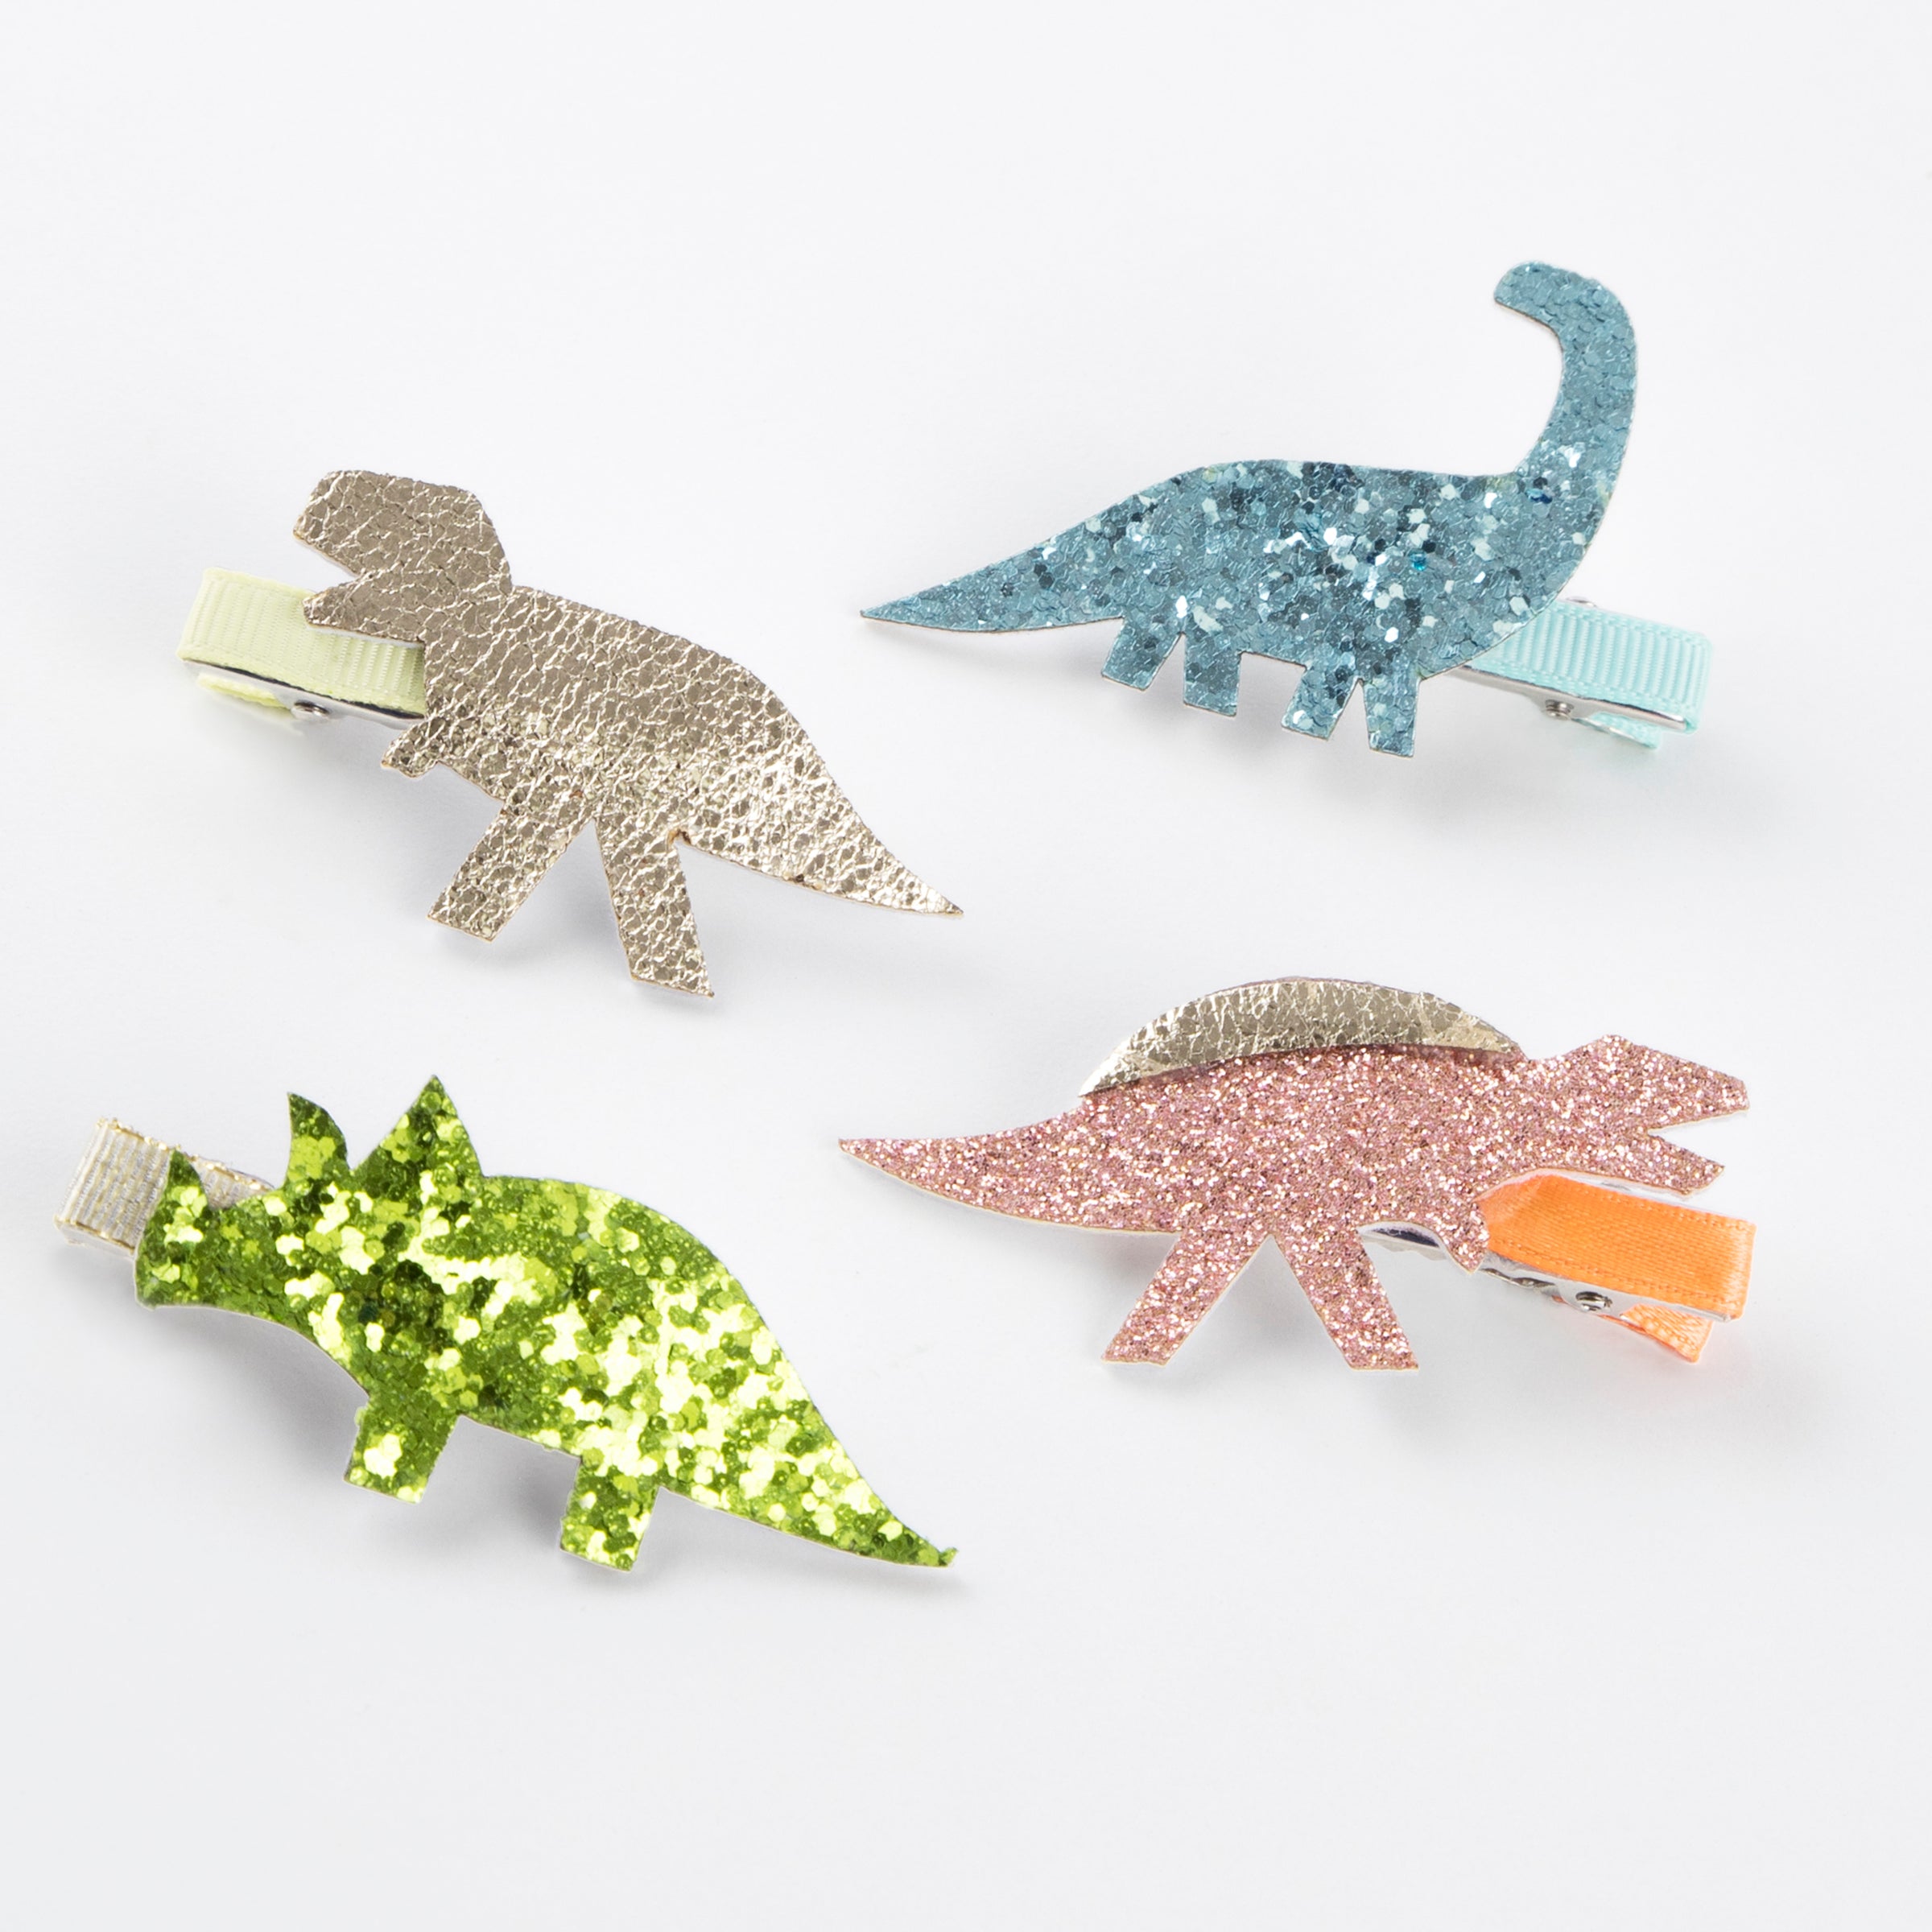 Small Alligator Clips - Crocodile Clips - Jewelry Clips - Craft